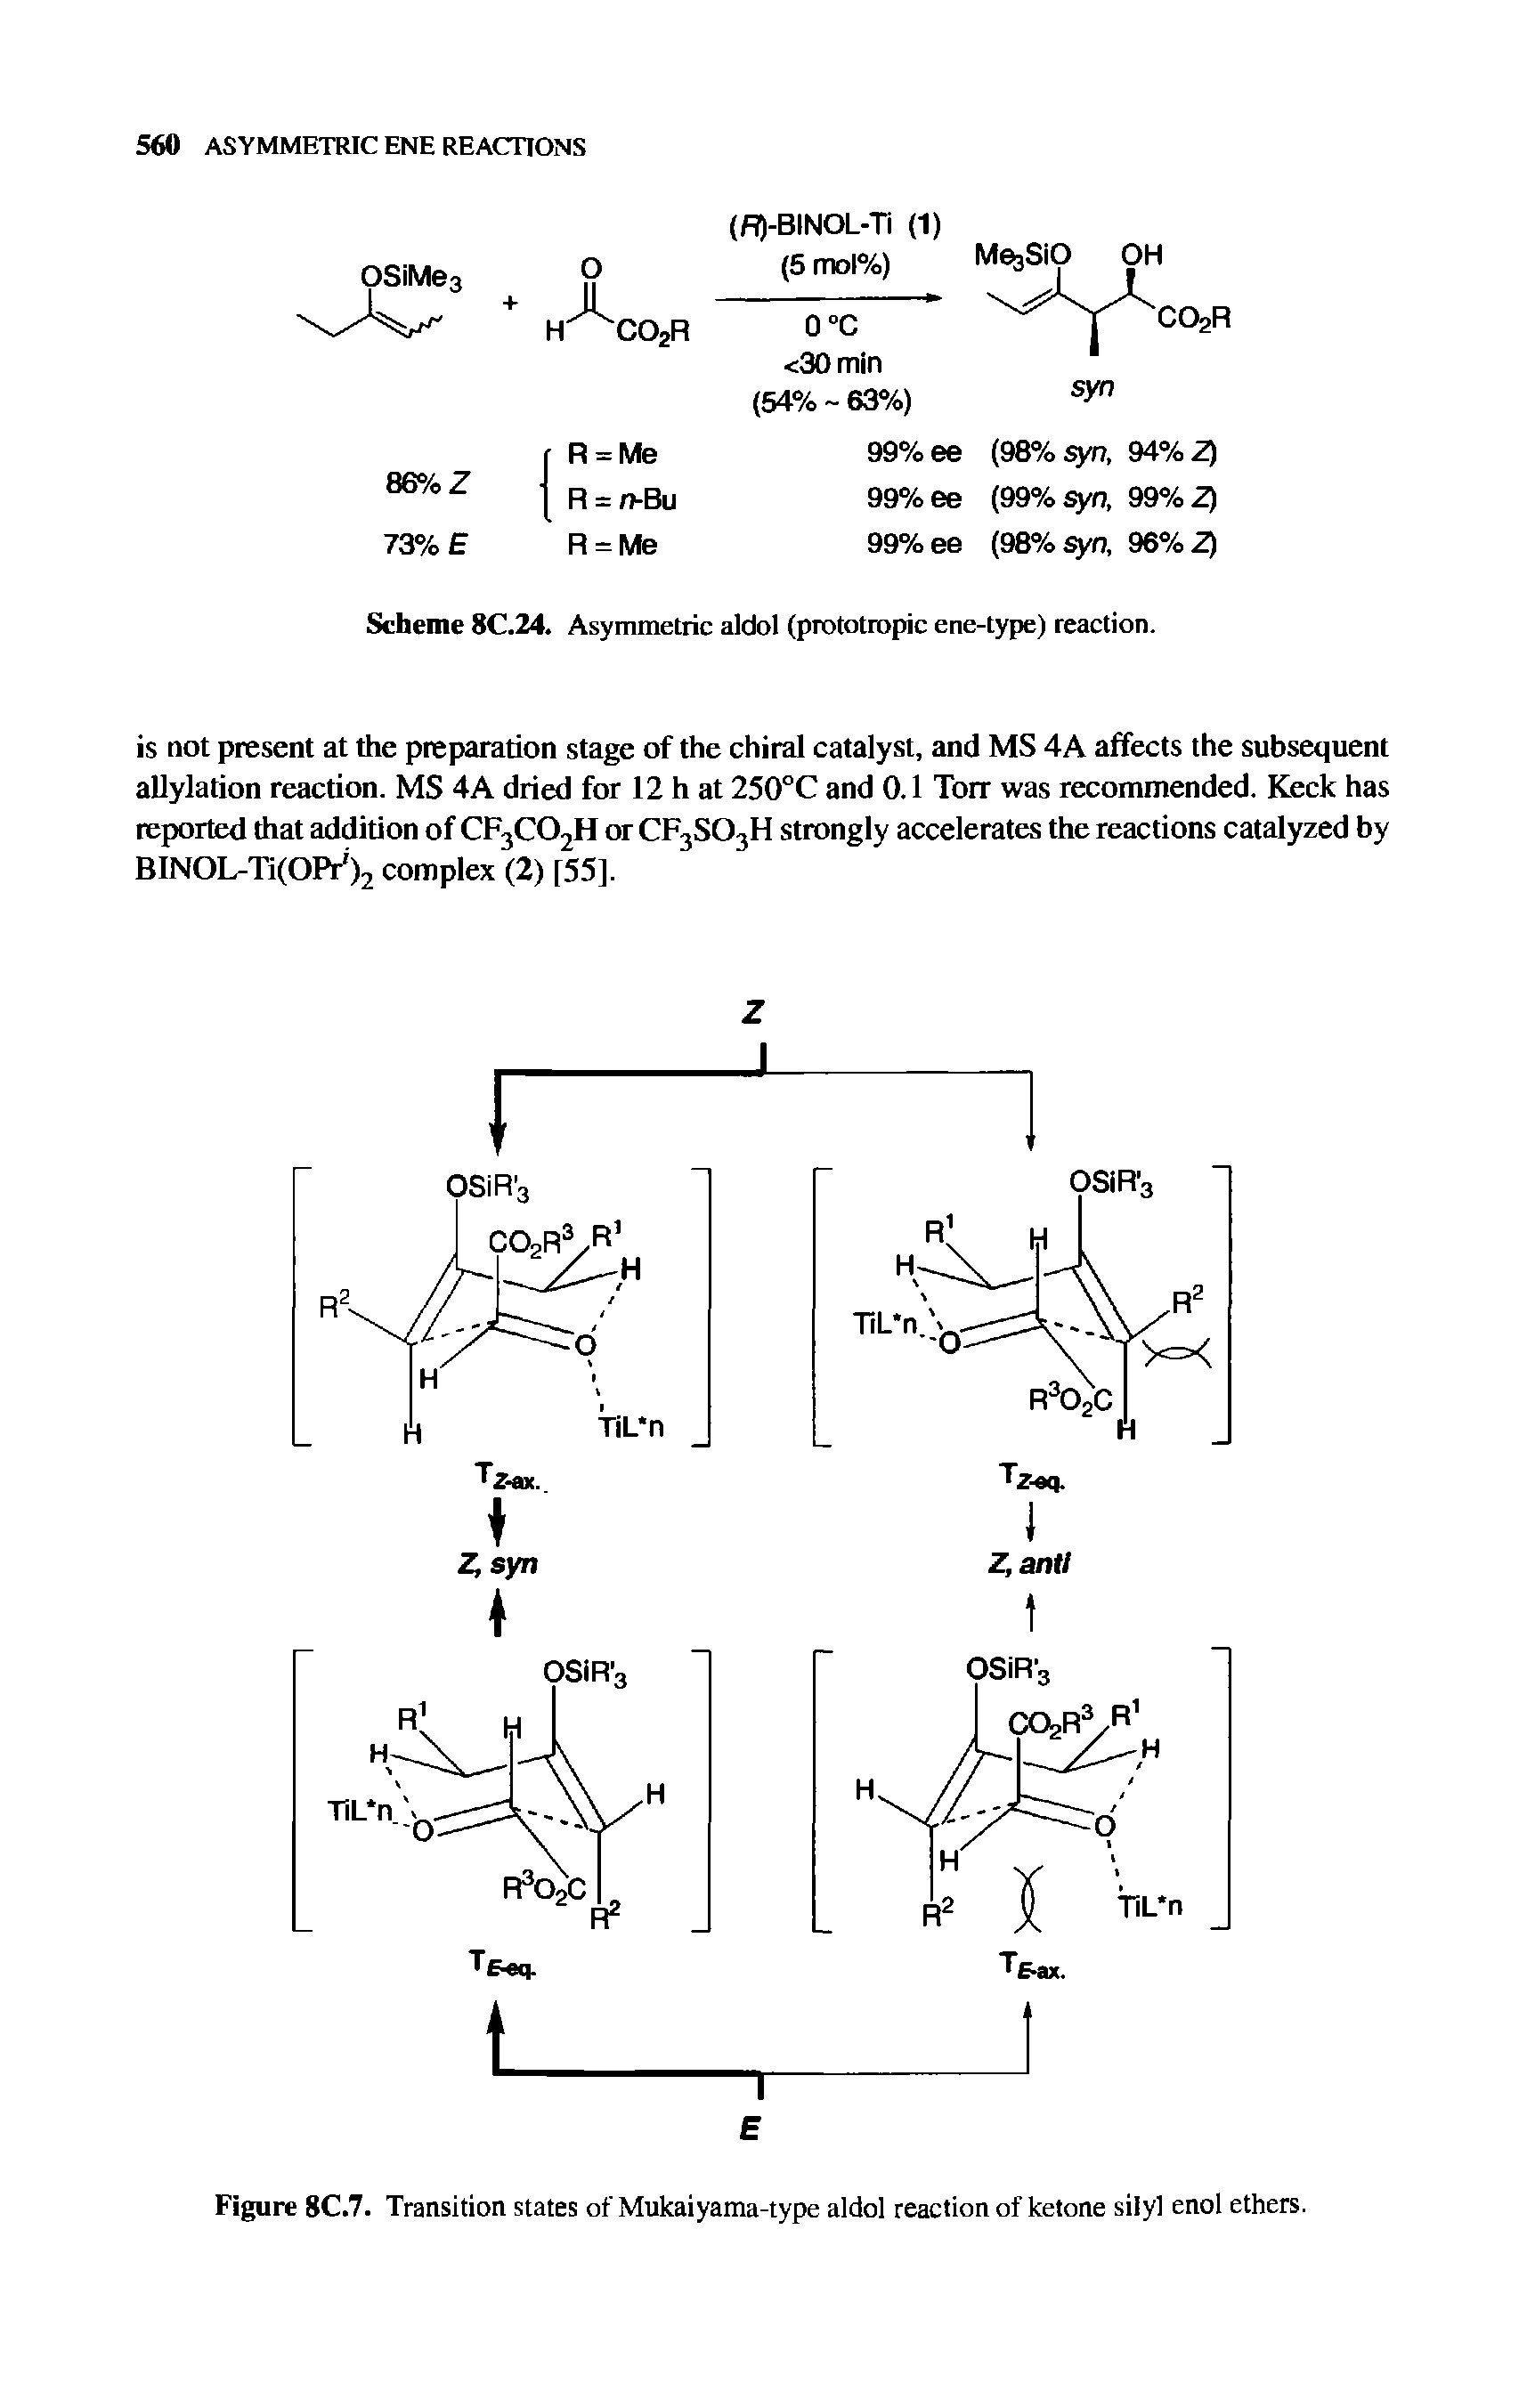 Figure 8C.7. Transition states of Mukaiyama-type aldol reaction of ketone silyl enol ethers.